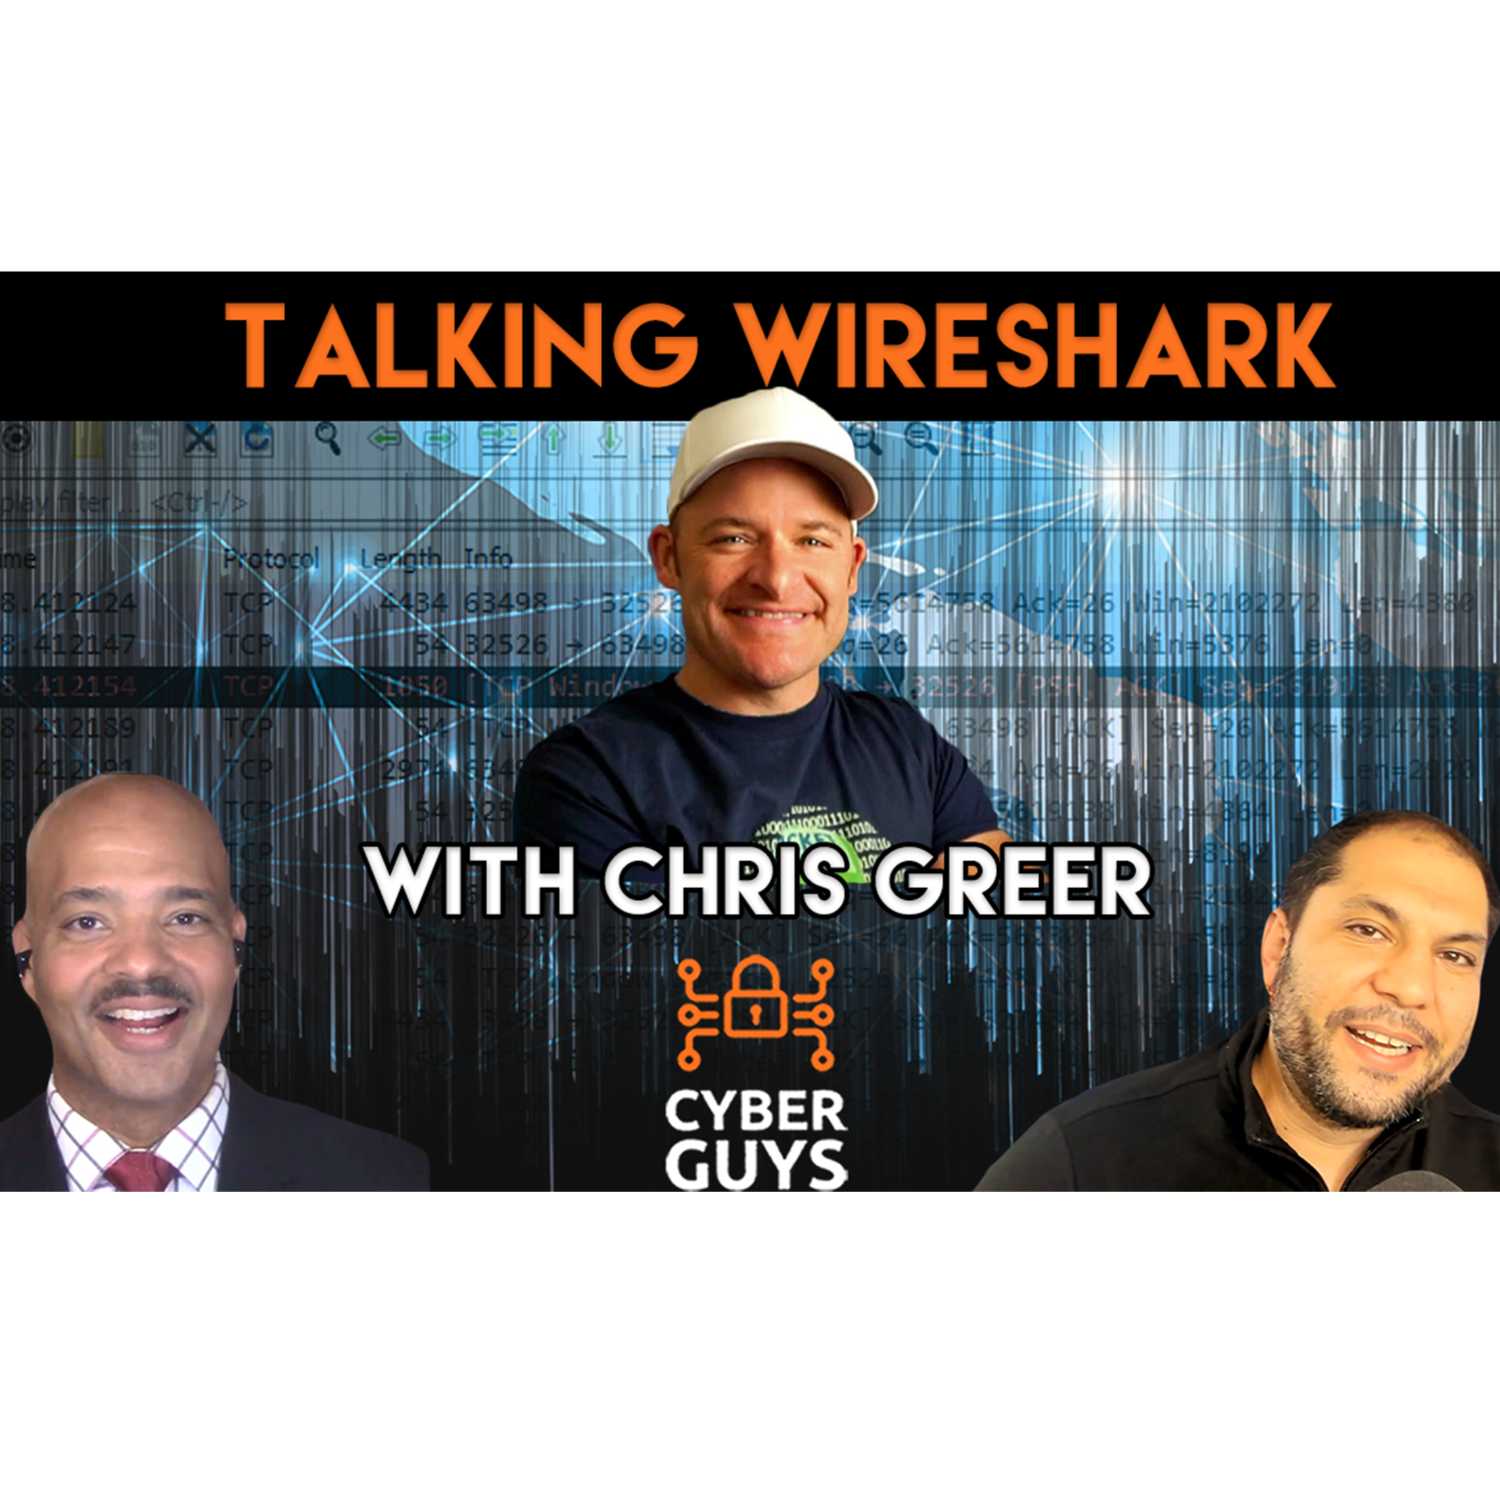 Talking Wireshark with Chris Greer